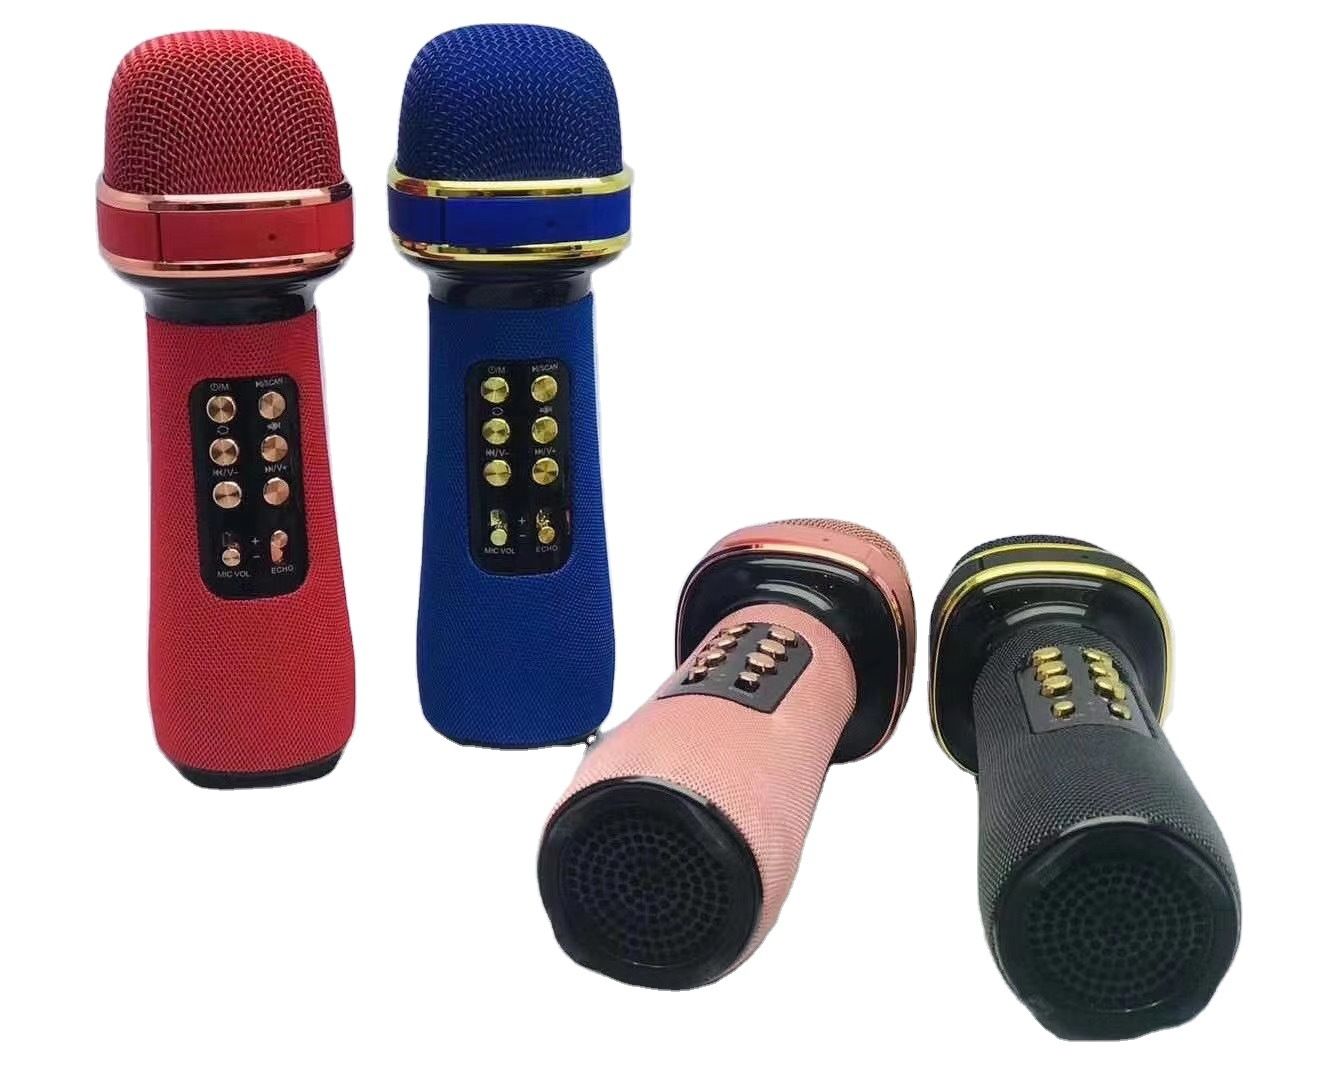 ws-898 Micrófono de karaoke 7 en 1 Altavoz Bluetooth portátil 